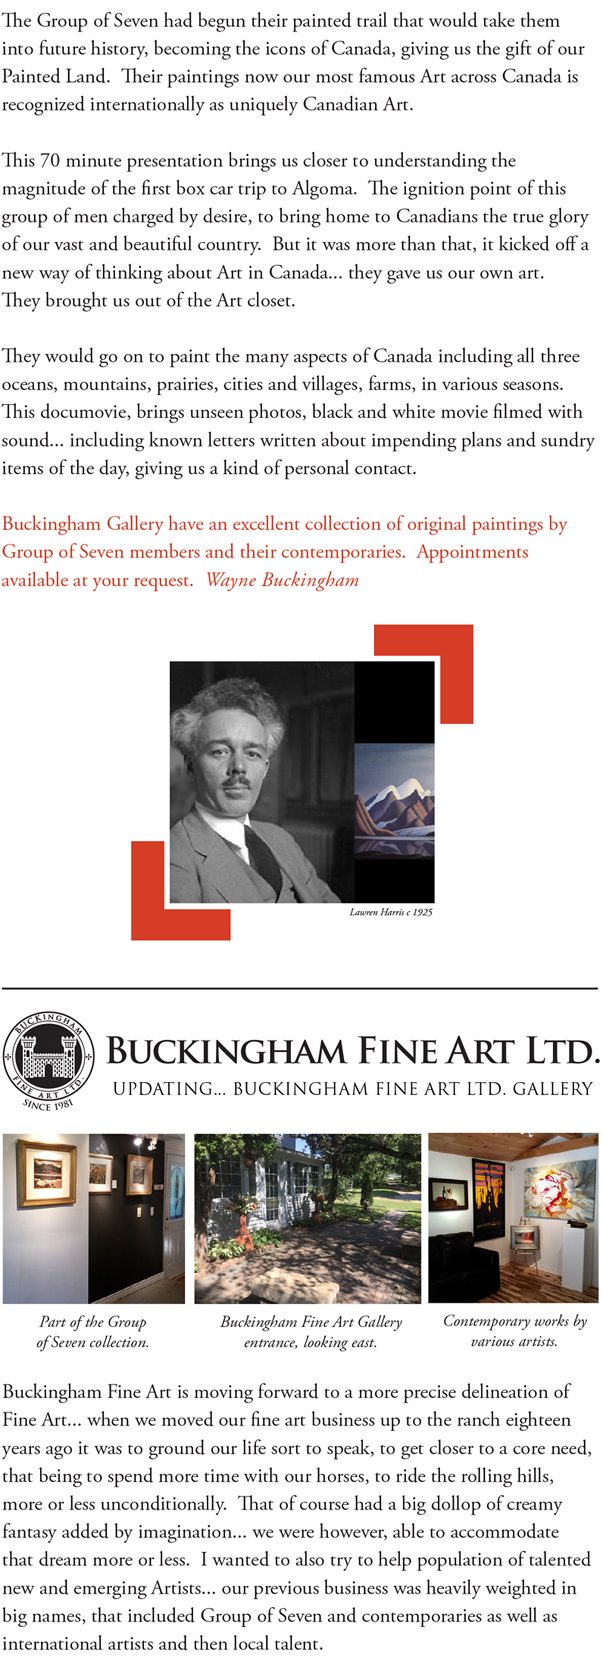 ARTicle - Buckingham Fine Art